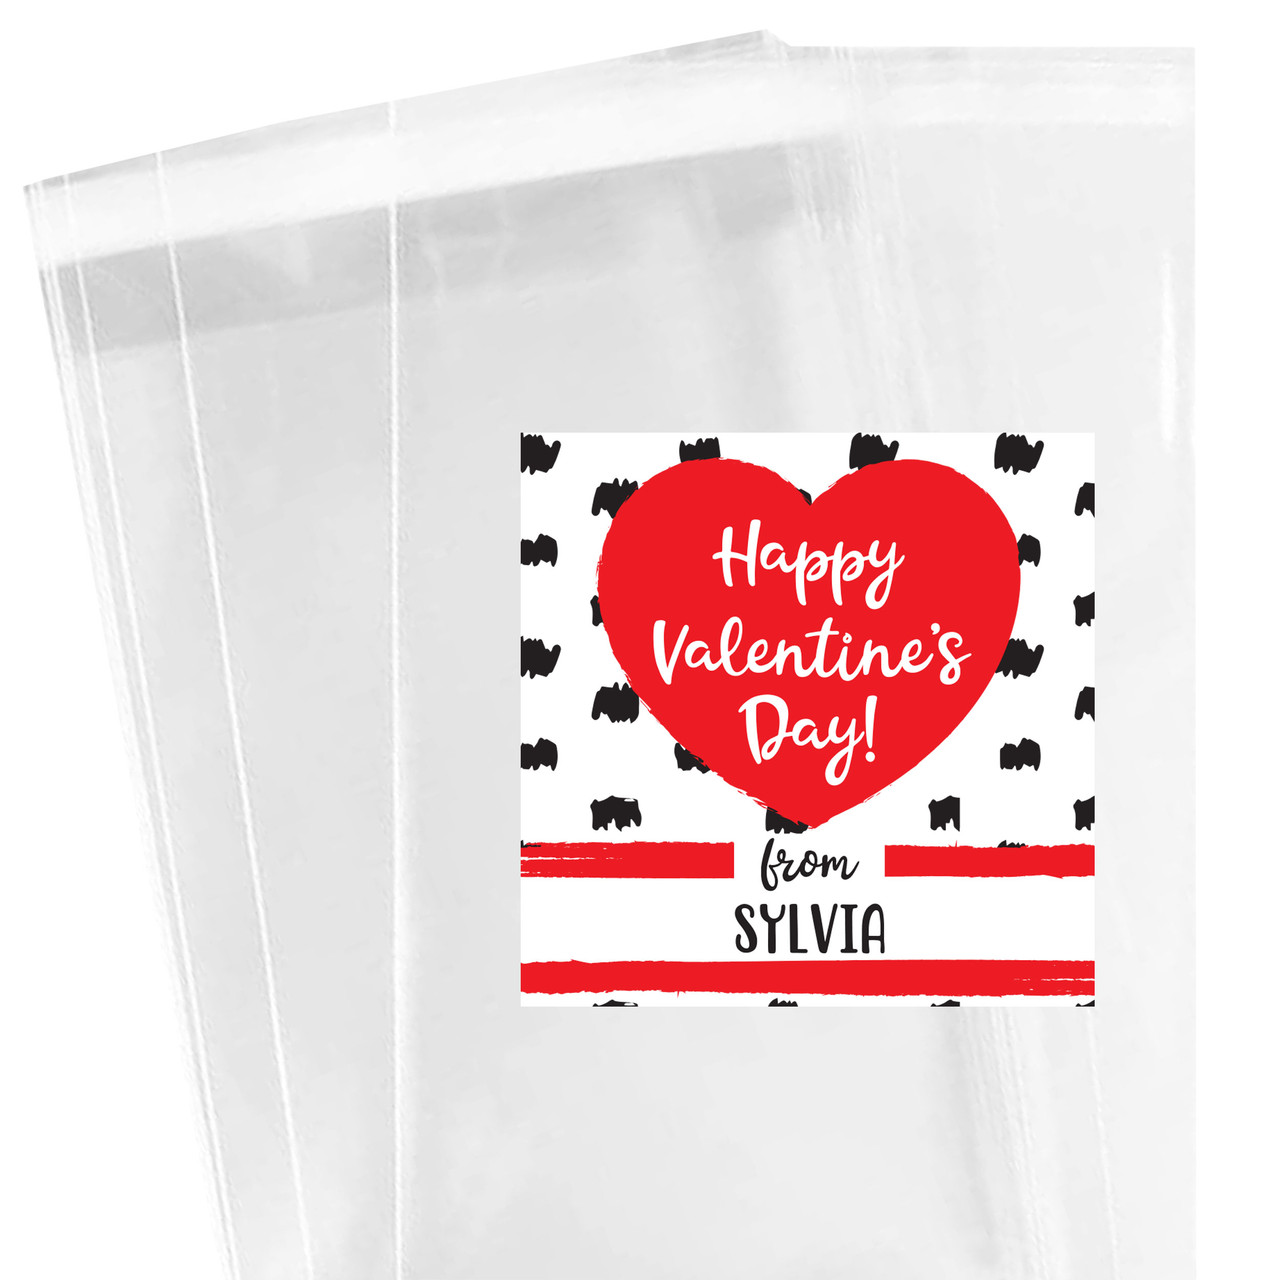 Bulk 48 Pc. Personalized Happy Valentine's Day Favor Stickers